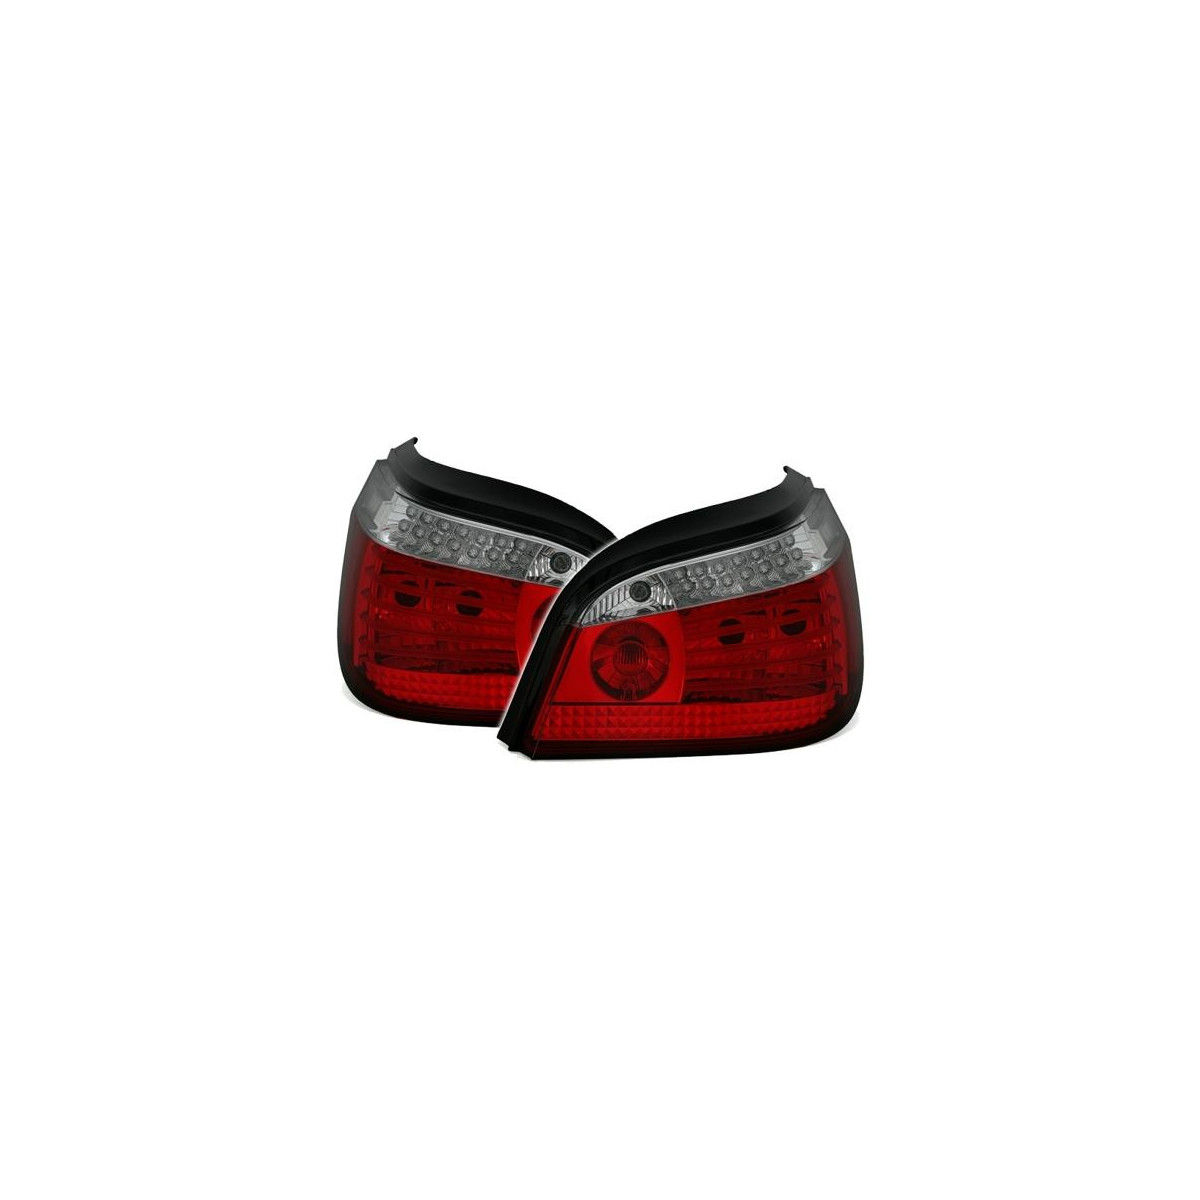 LAMPY TYLNE LED  BMW E60 03-07 RED WHITE